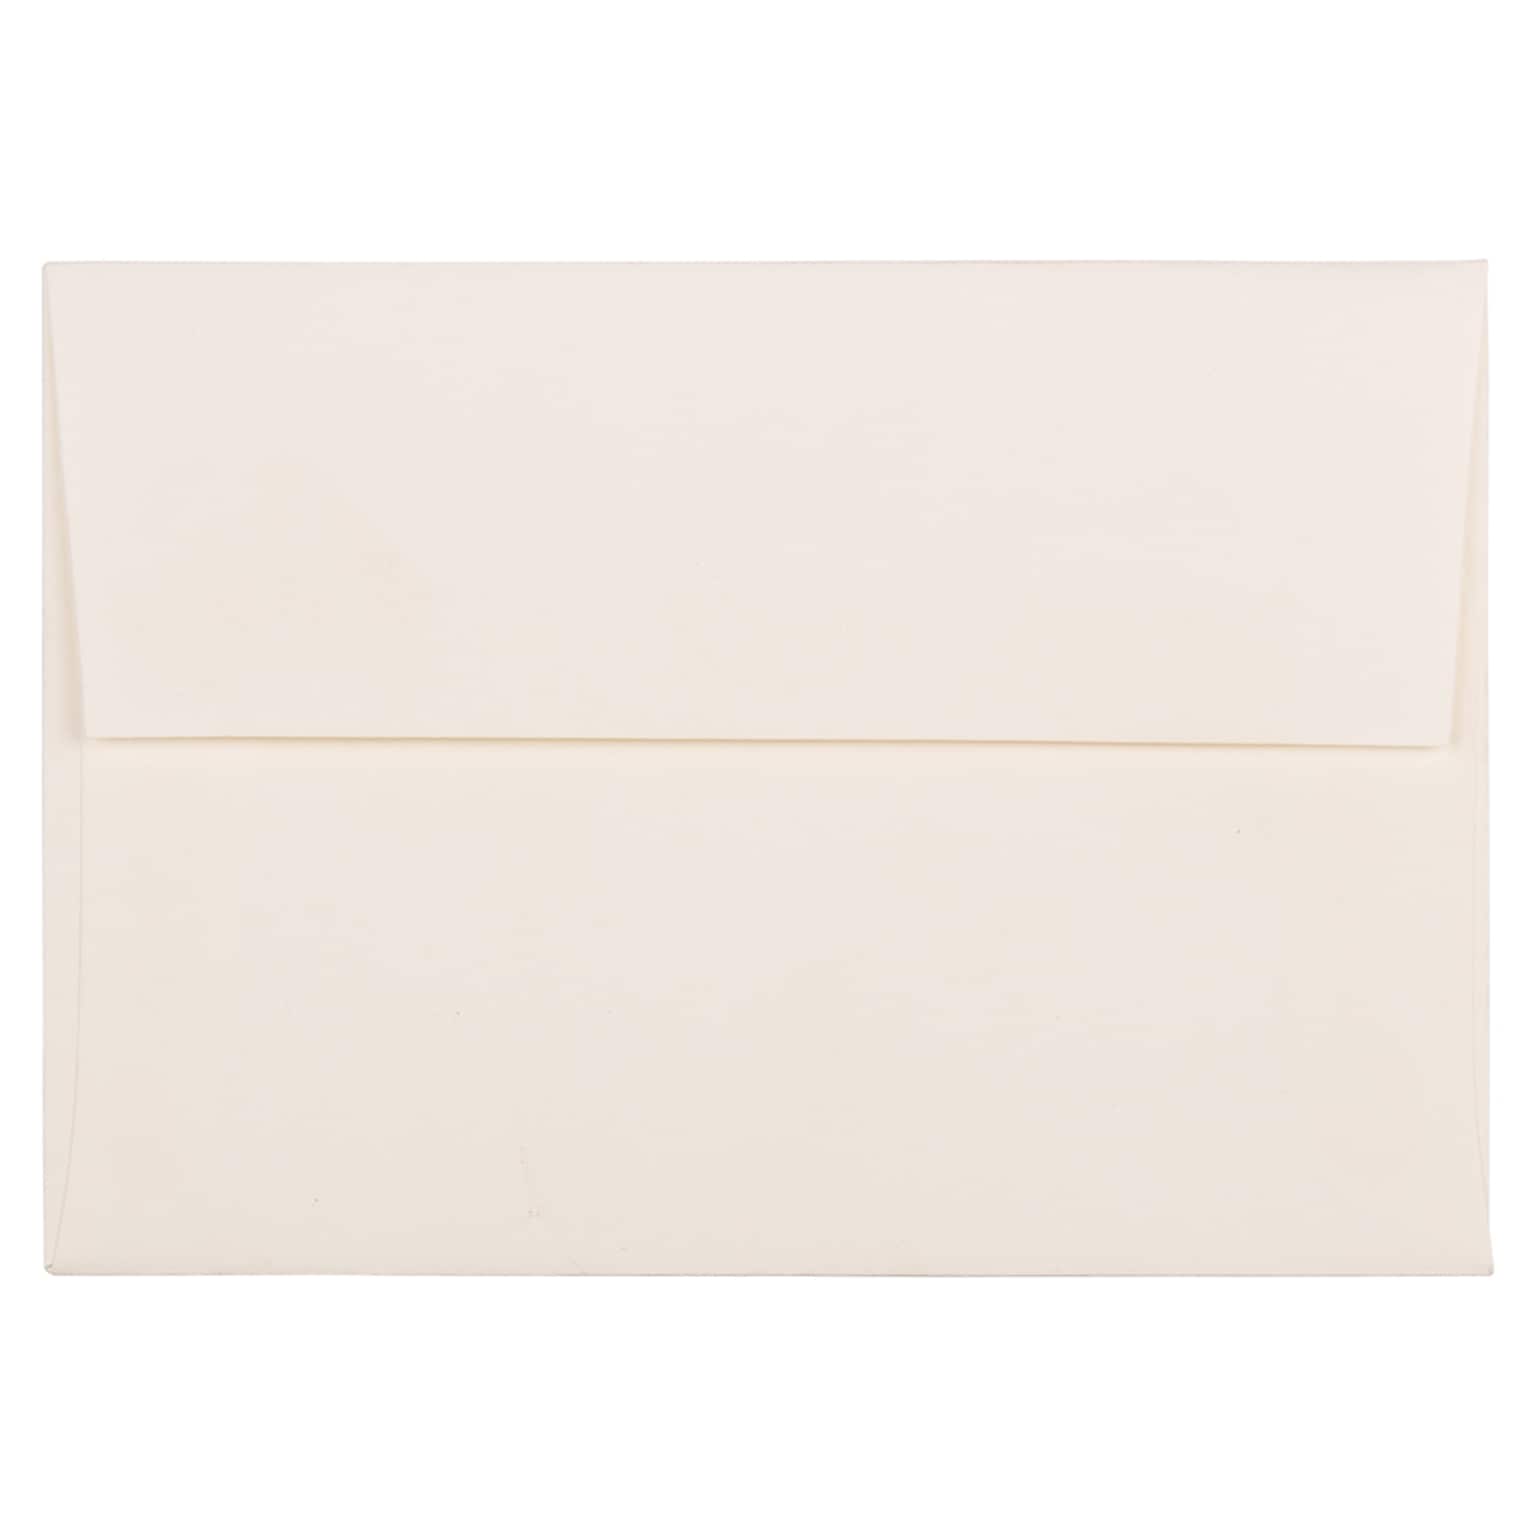 JAM Paper 4Bar A1 Strathmore Invitation Envelopes, 3.625 x 5.125, Natural White Wove, 25/Pack (194891)